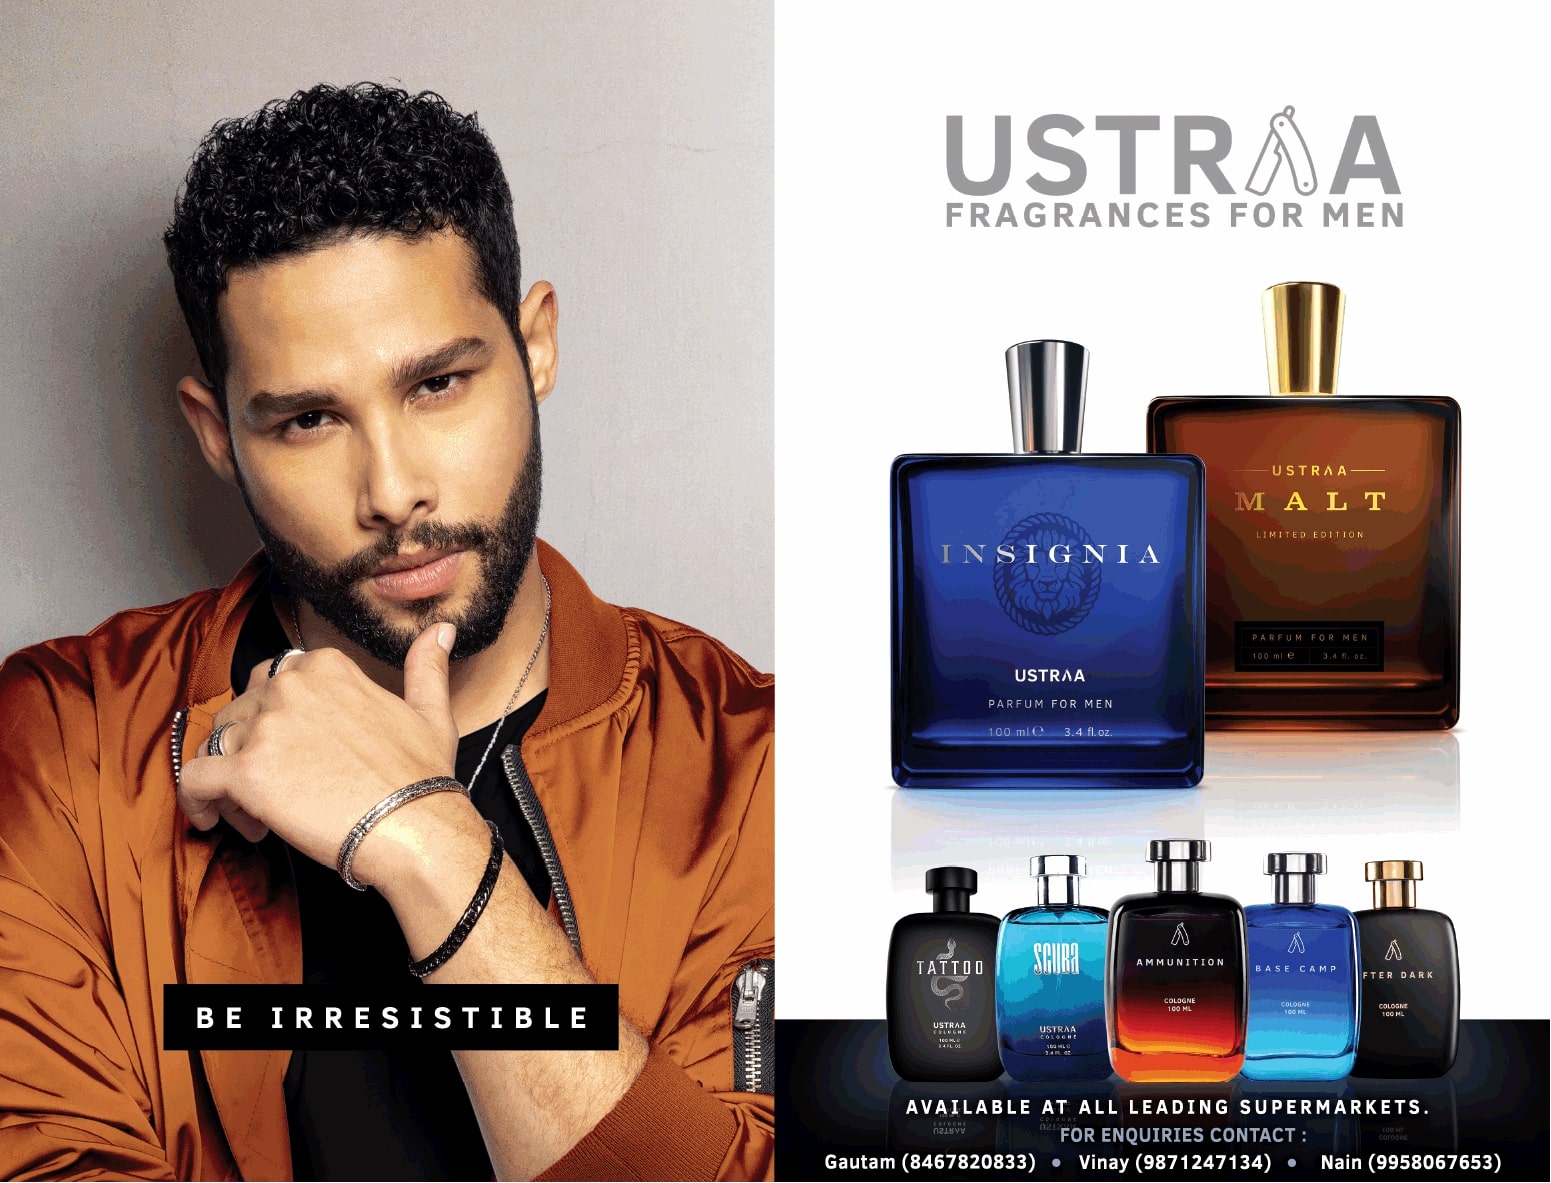 ustraa-fragrances-for-men-be-irresistible-ad-delhi-times-07-02-2021